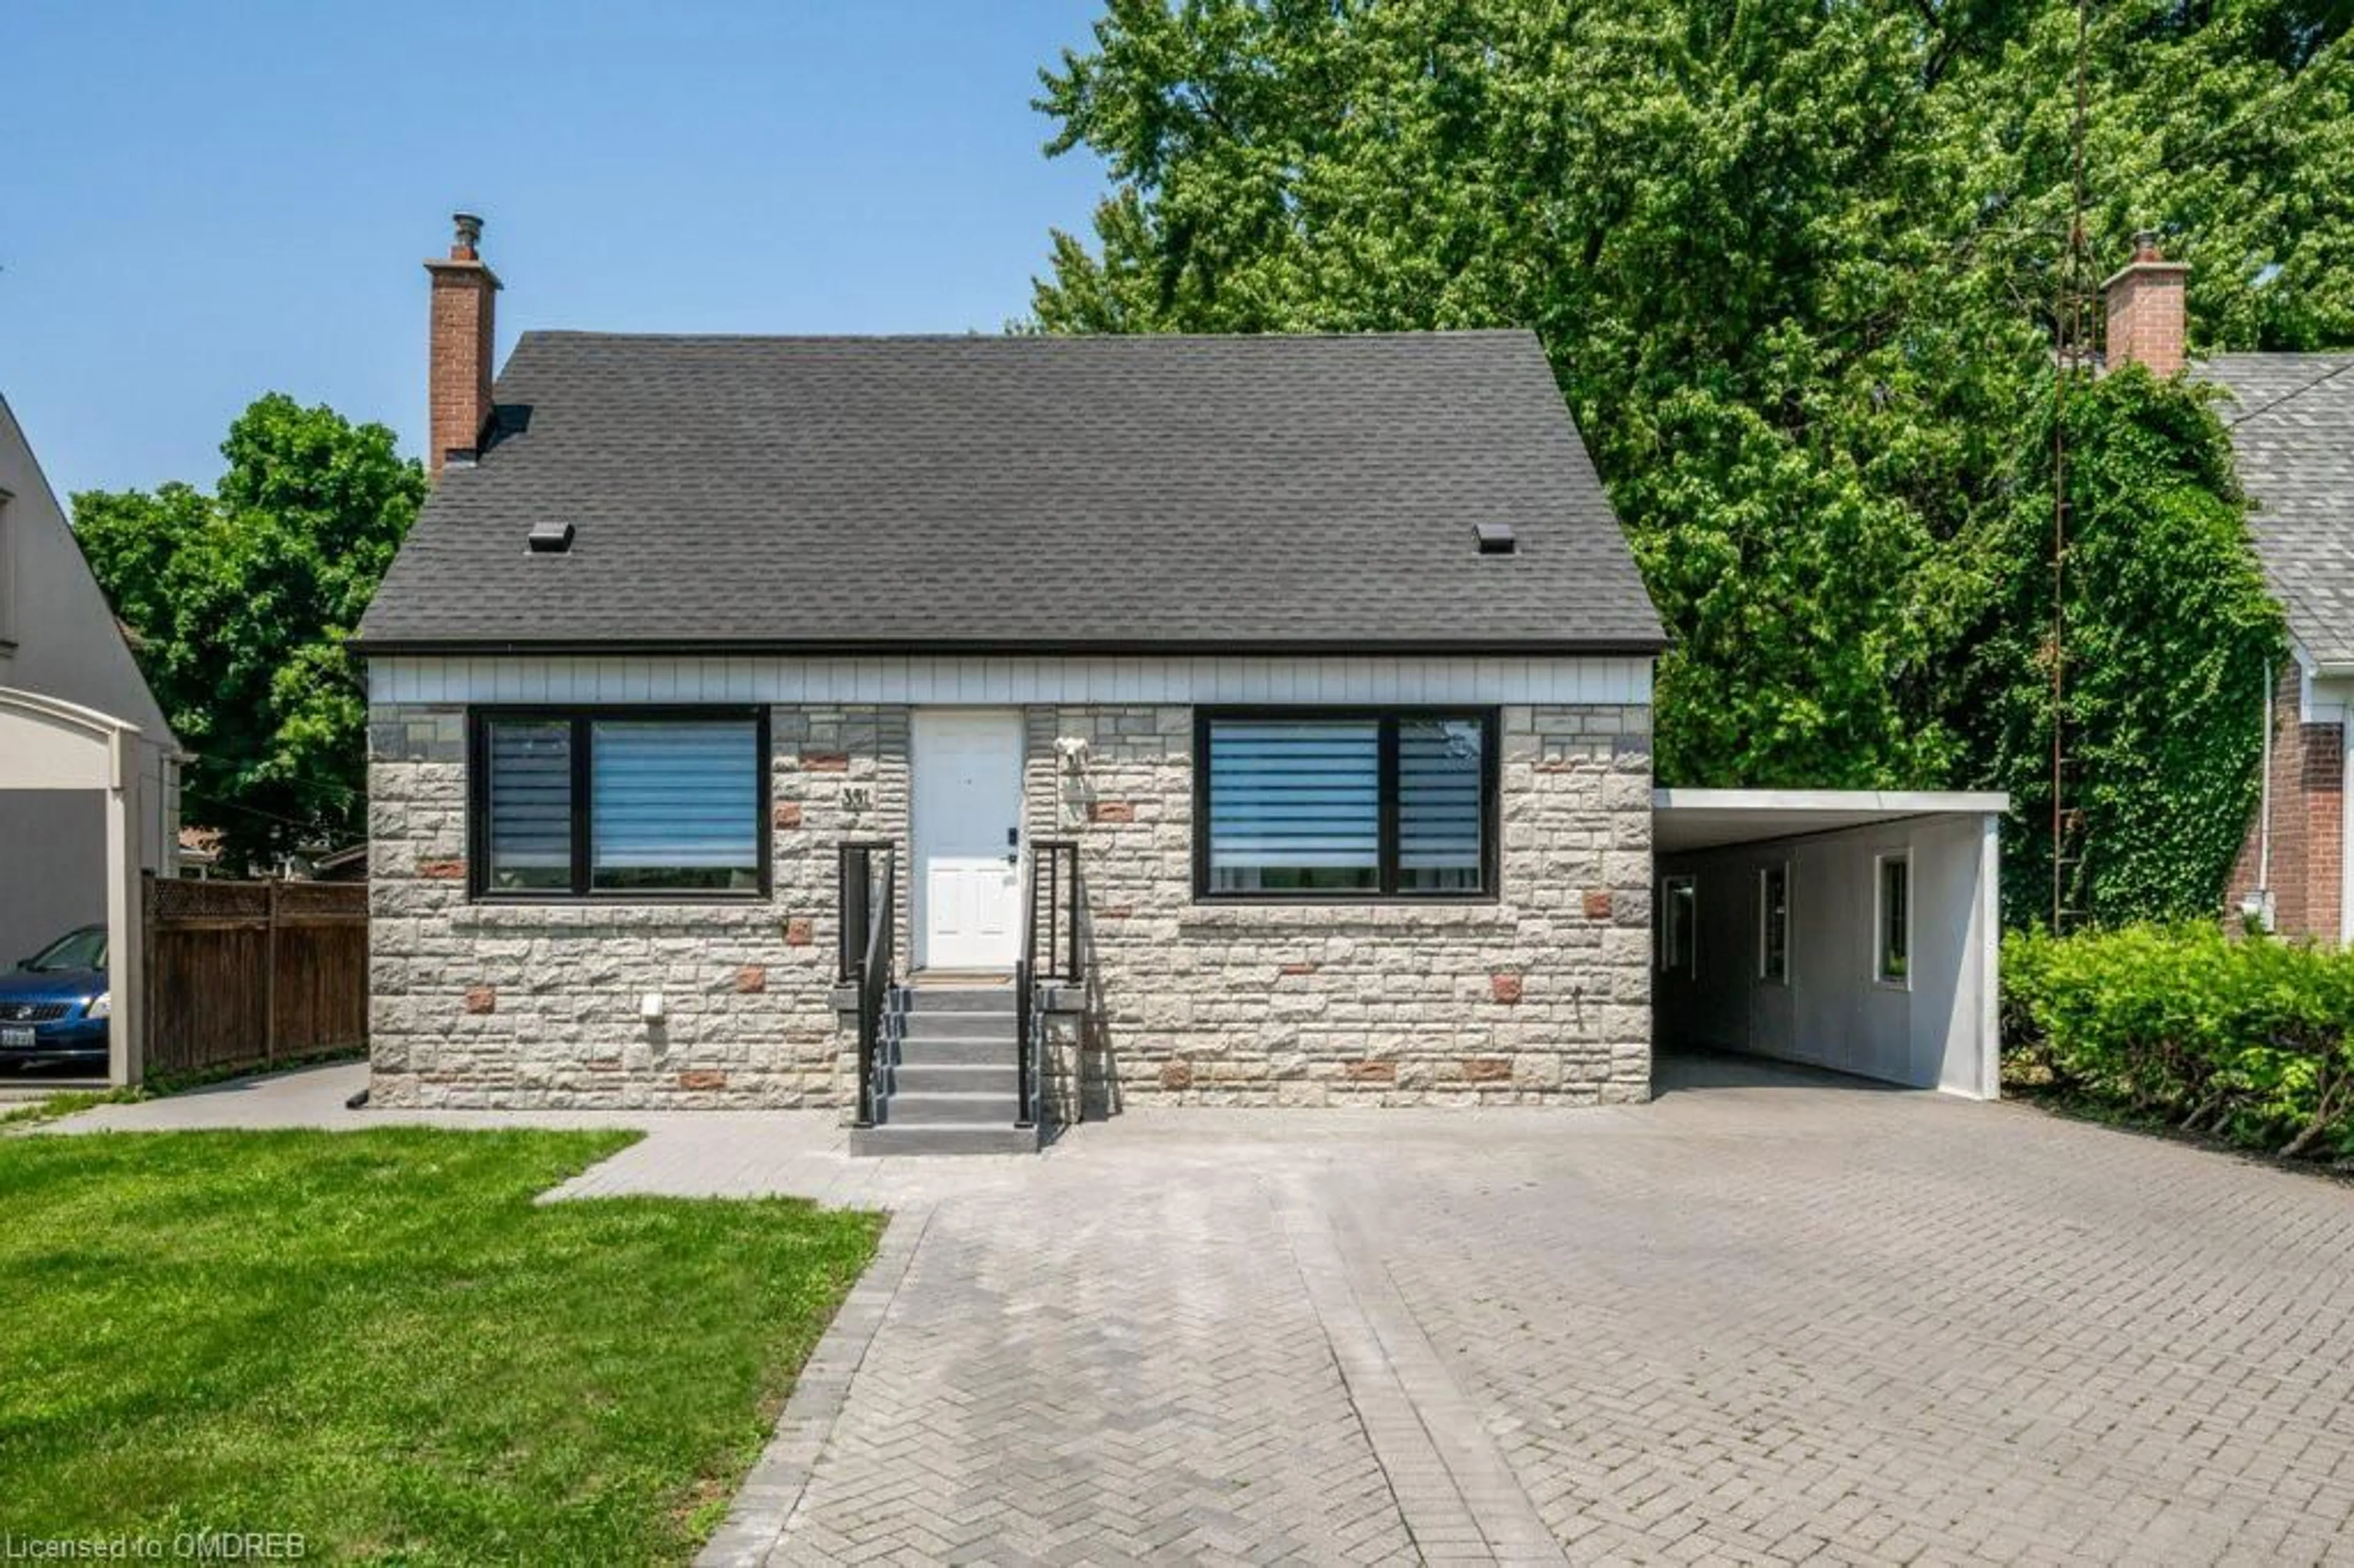 Cottage for 351 Burnhamthorpe Rd, Etobicoke Ontario M9B 2A5